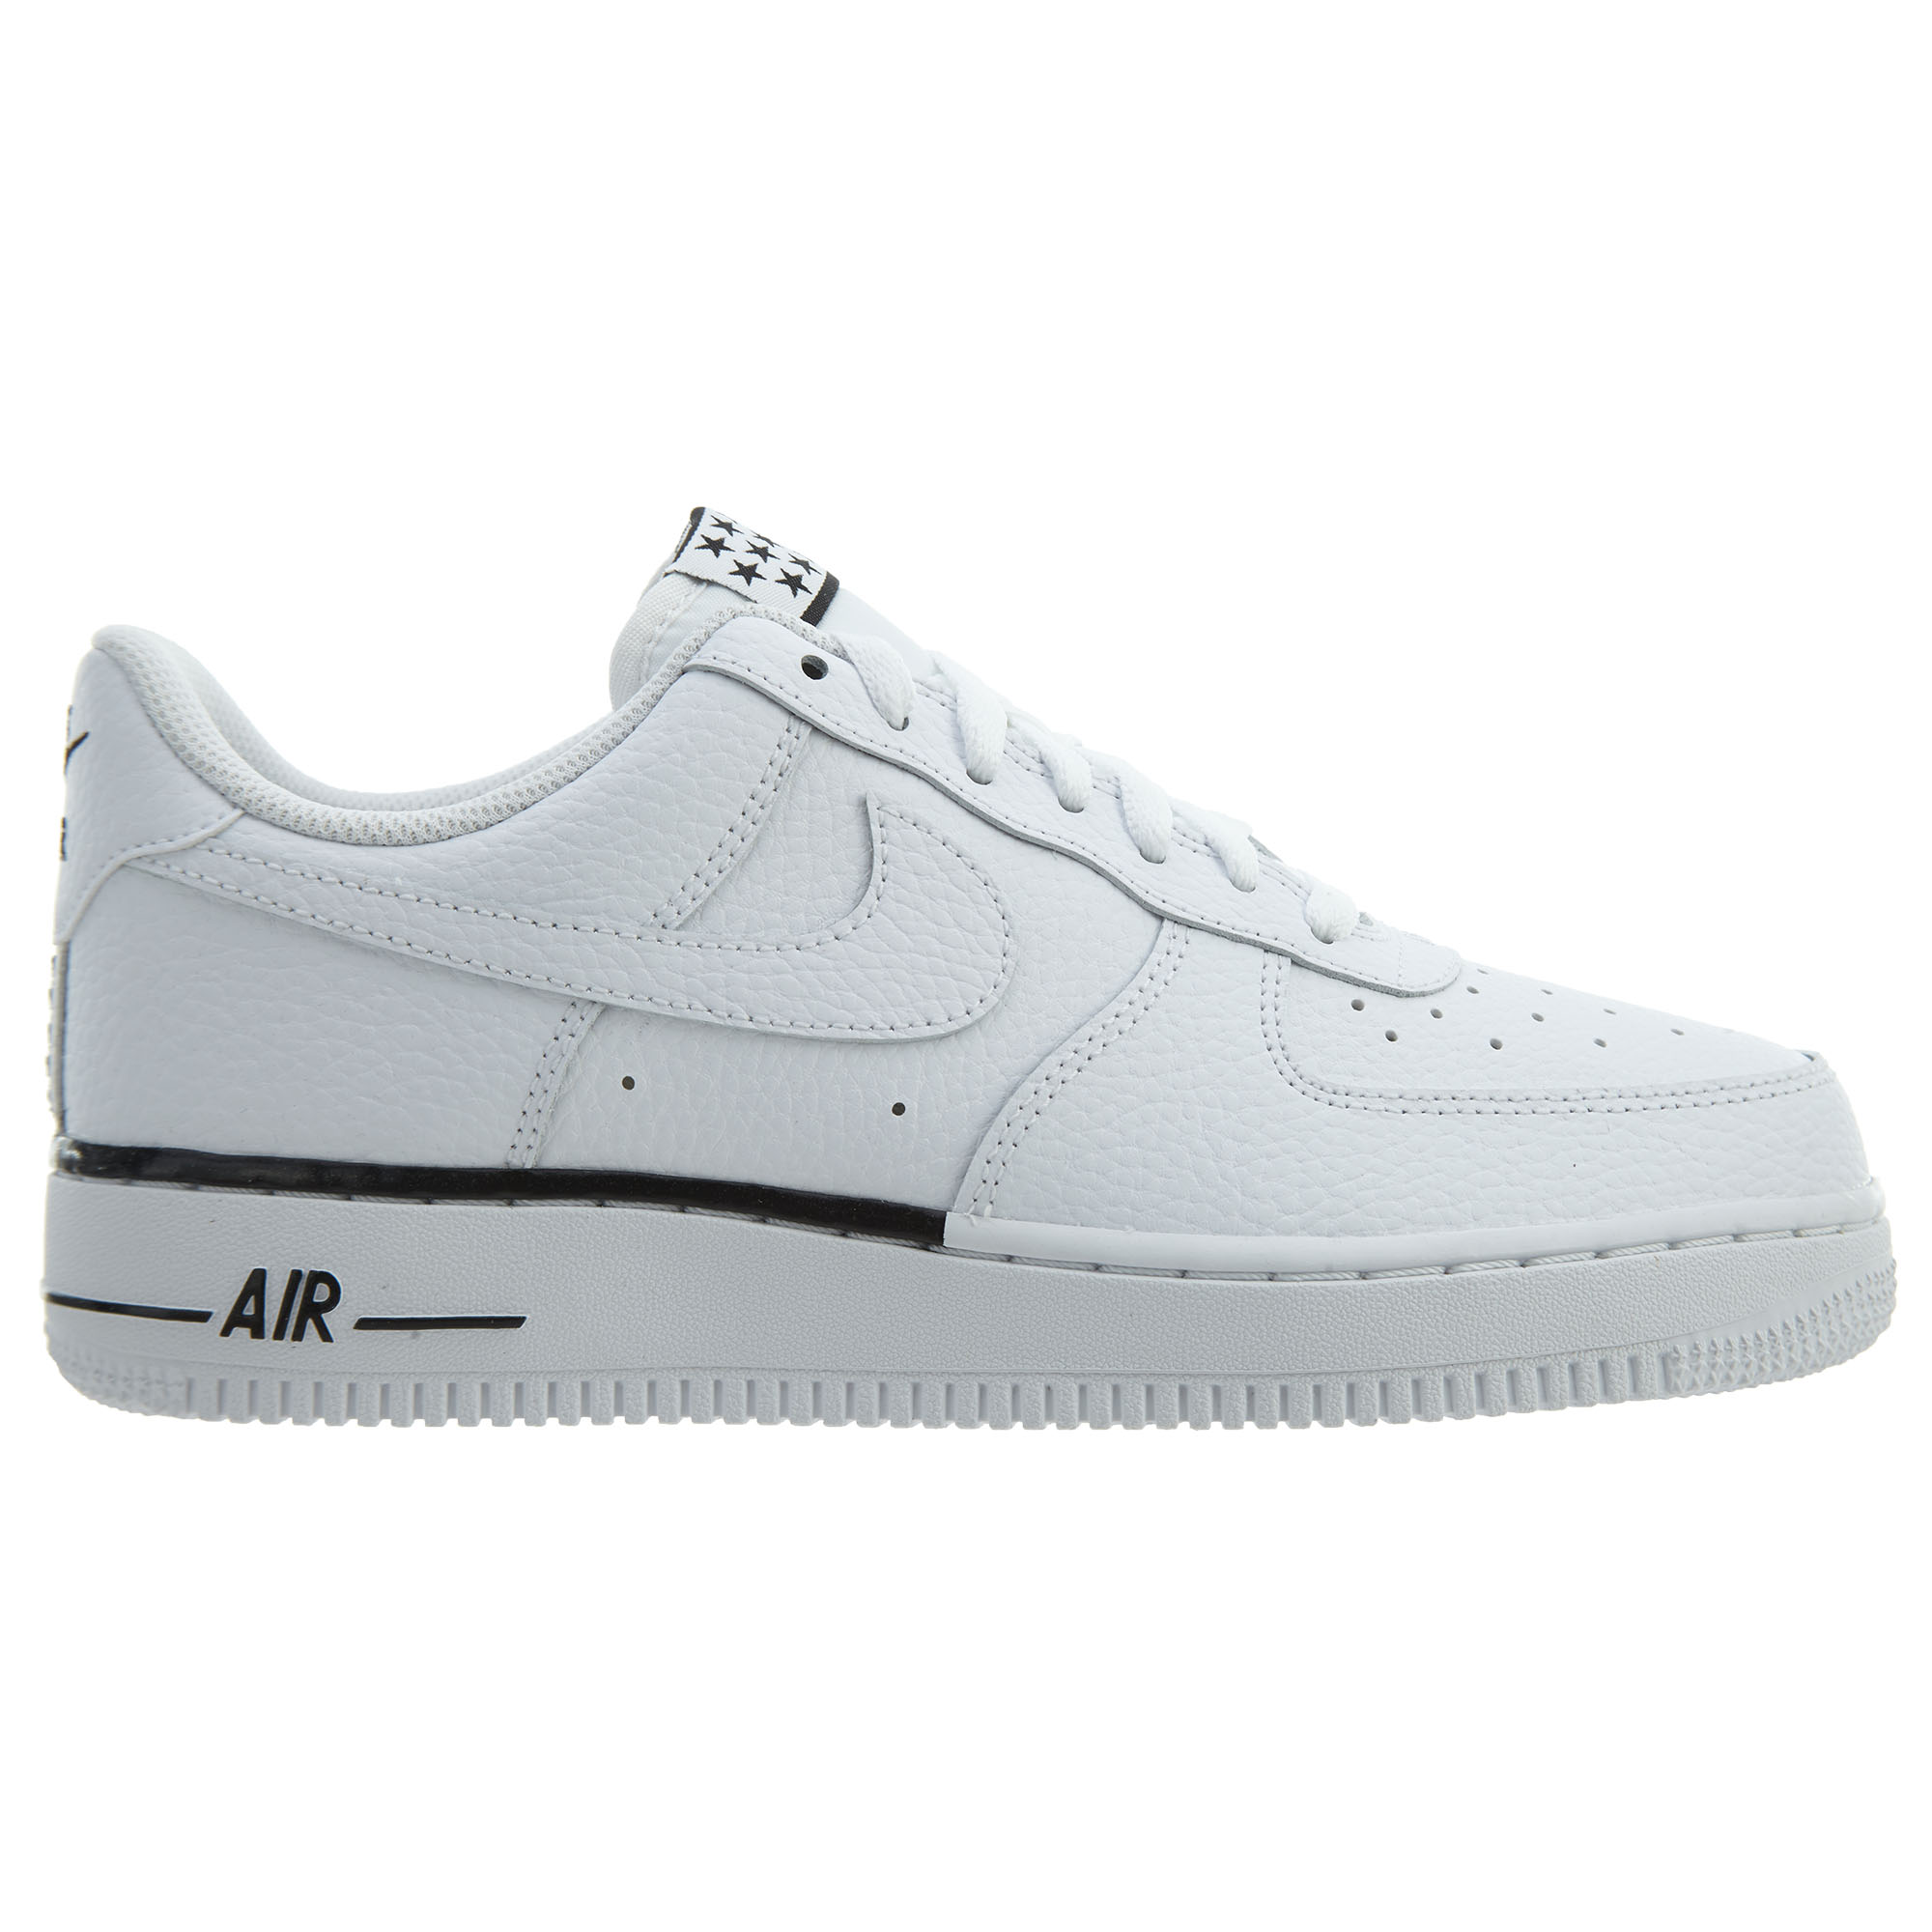 Nike Air Force 1 Low '07 White White Black